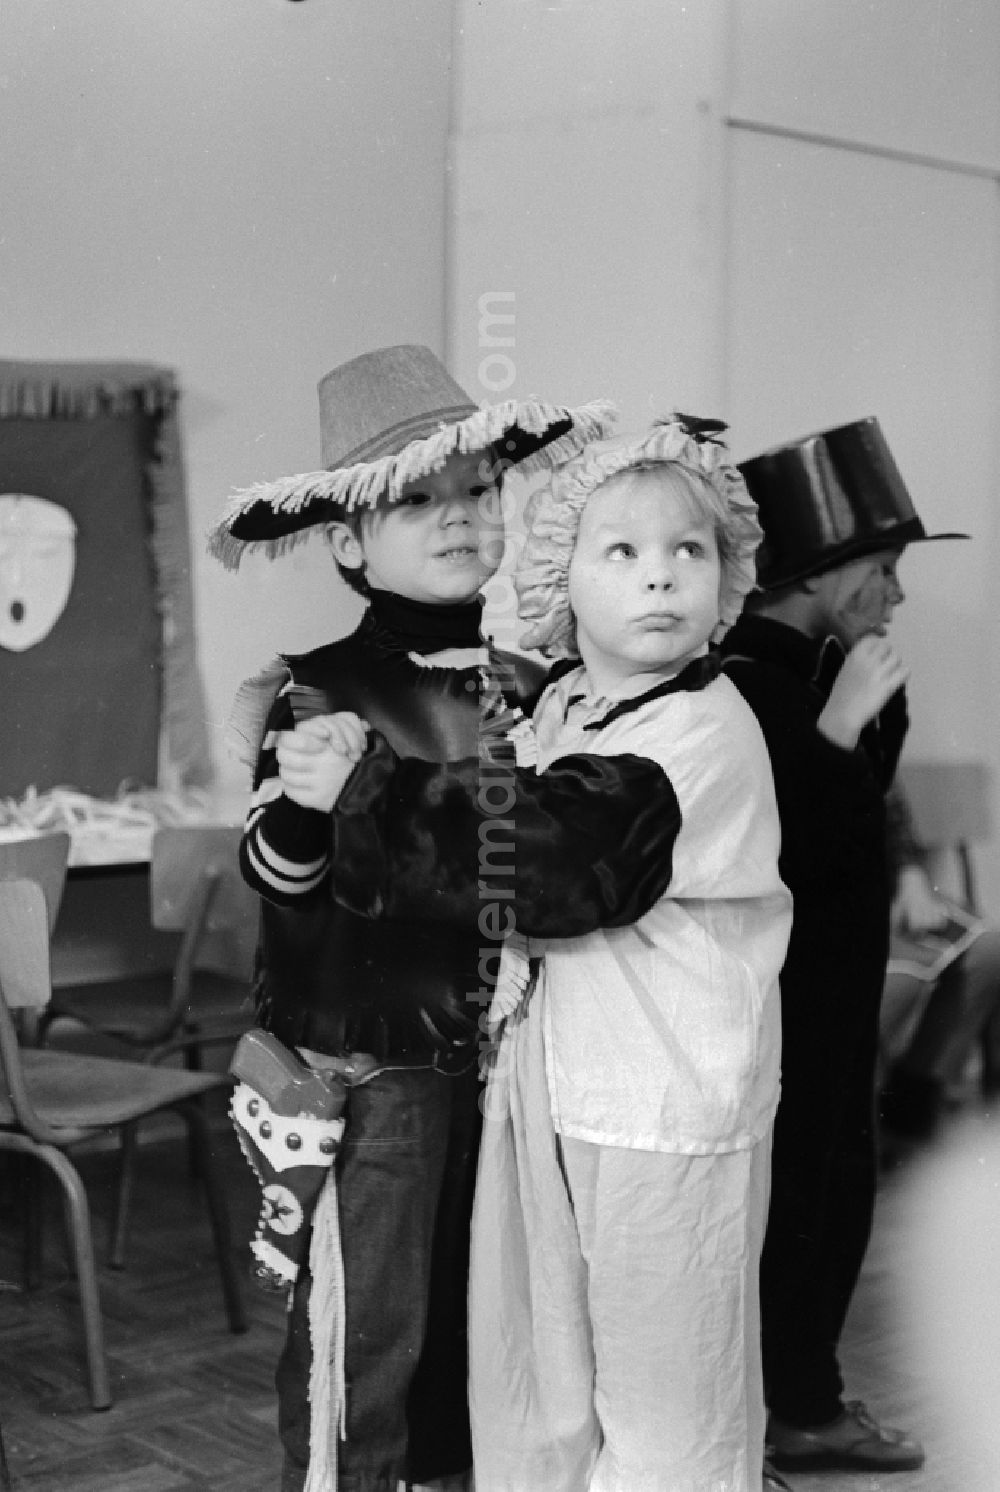 GDR photo archive: Berlin - Carnival in kindergarten in Berlin